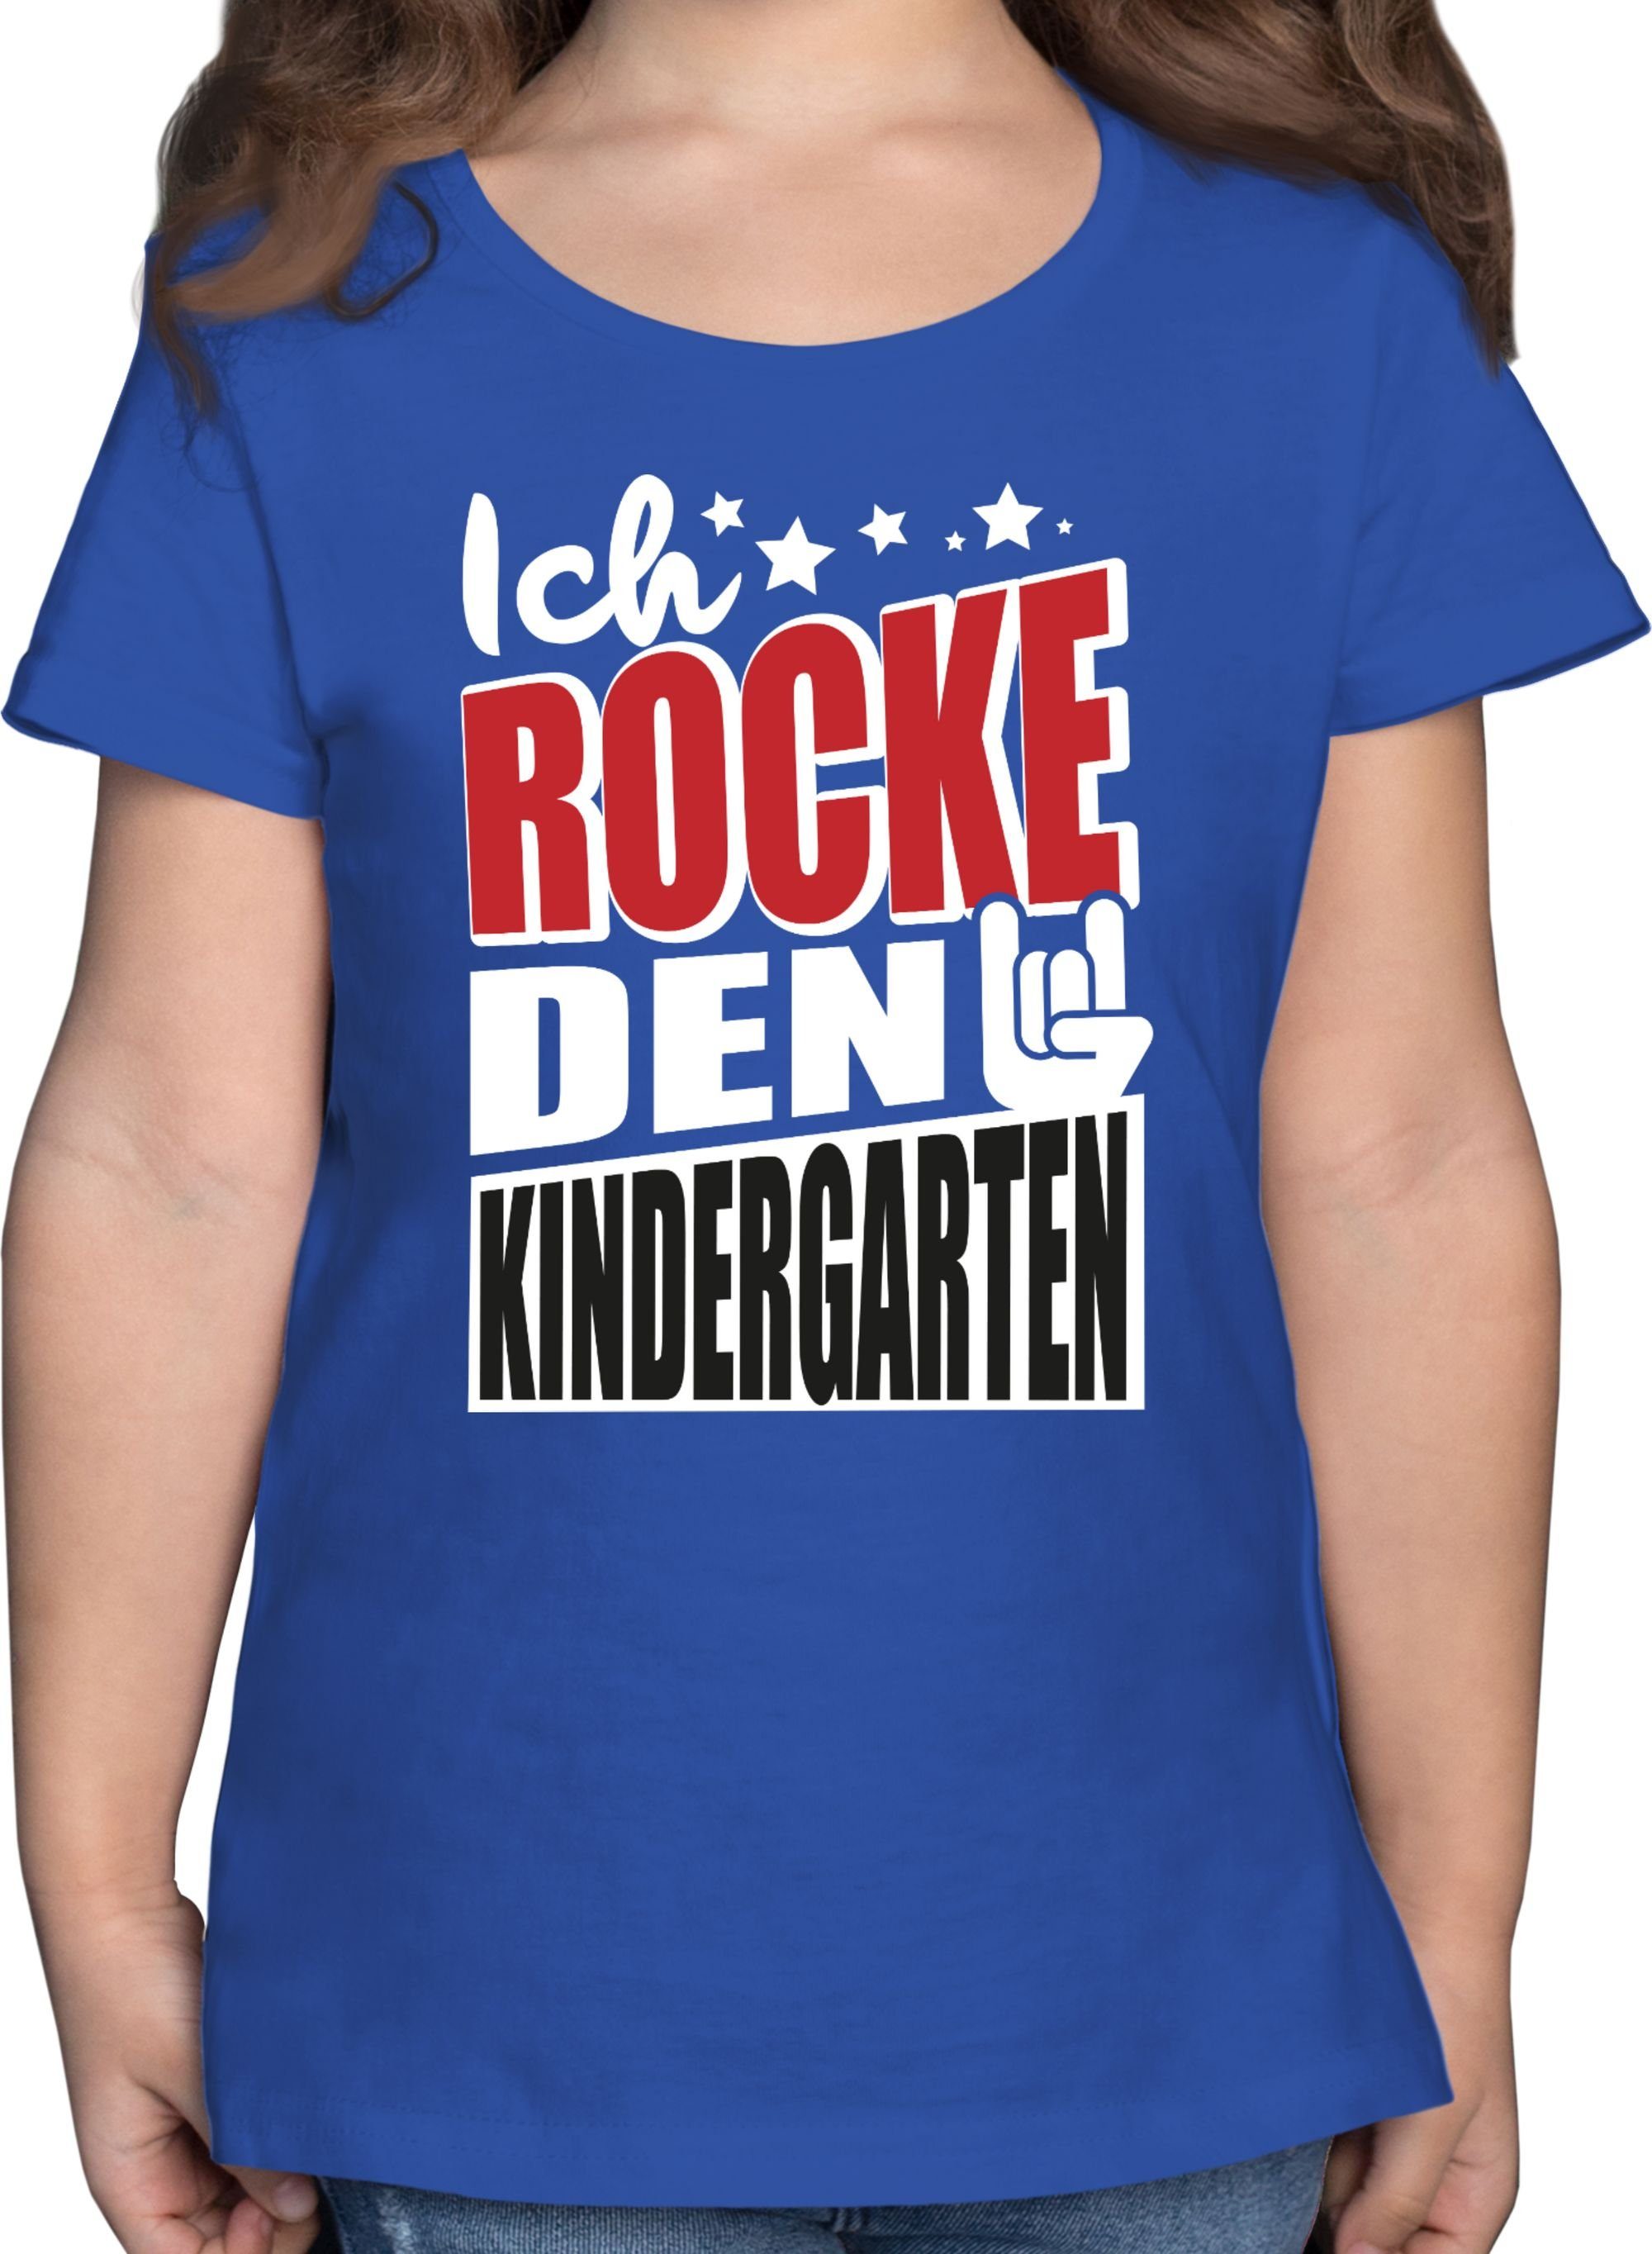 rocke 3 Kindergarten Shirtracer Ich Kindergarten T-Shirt den Royalblau Hallo